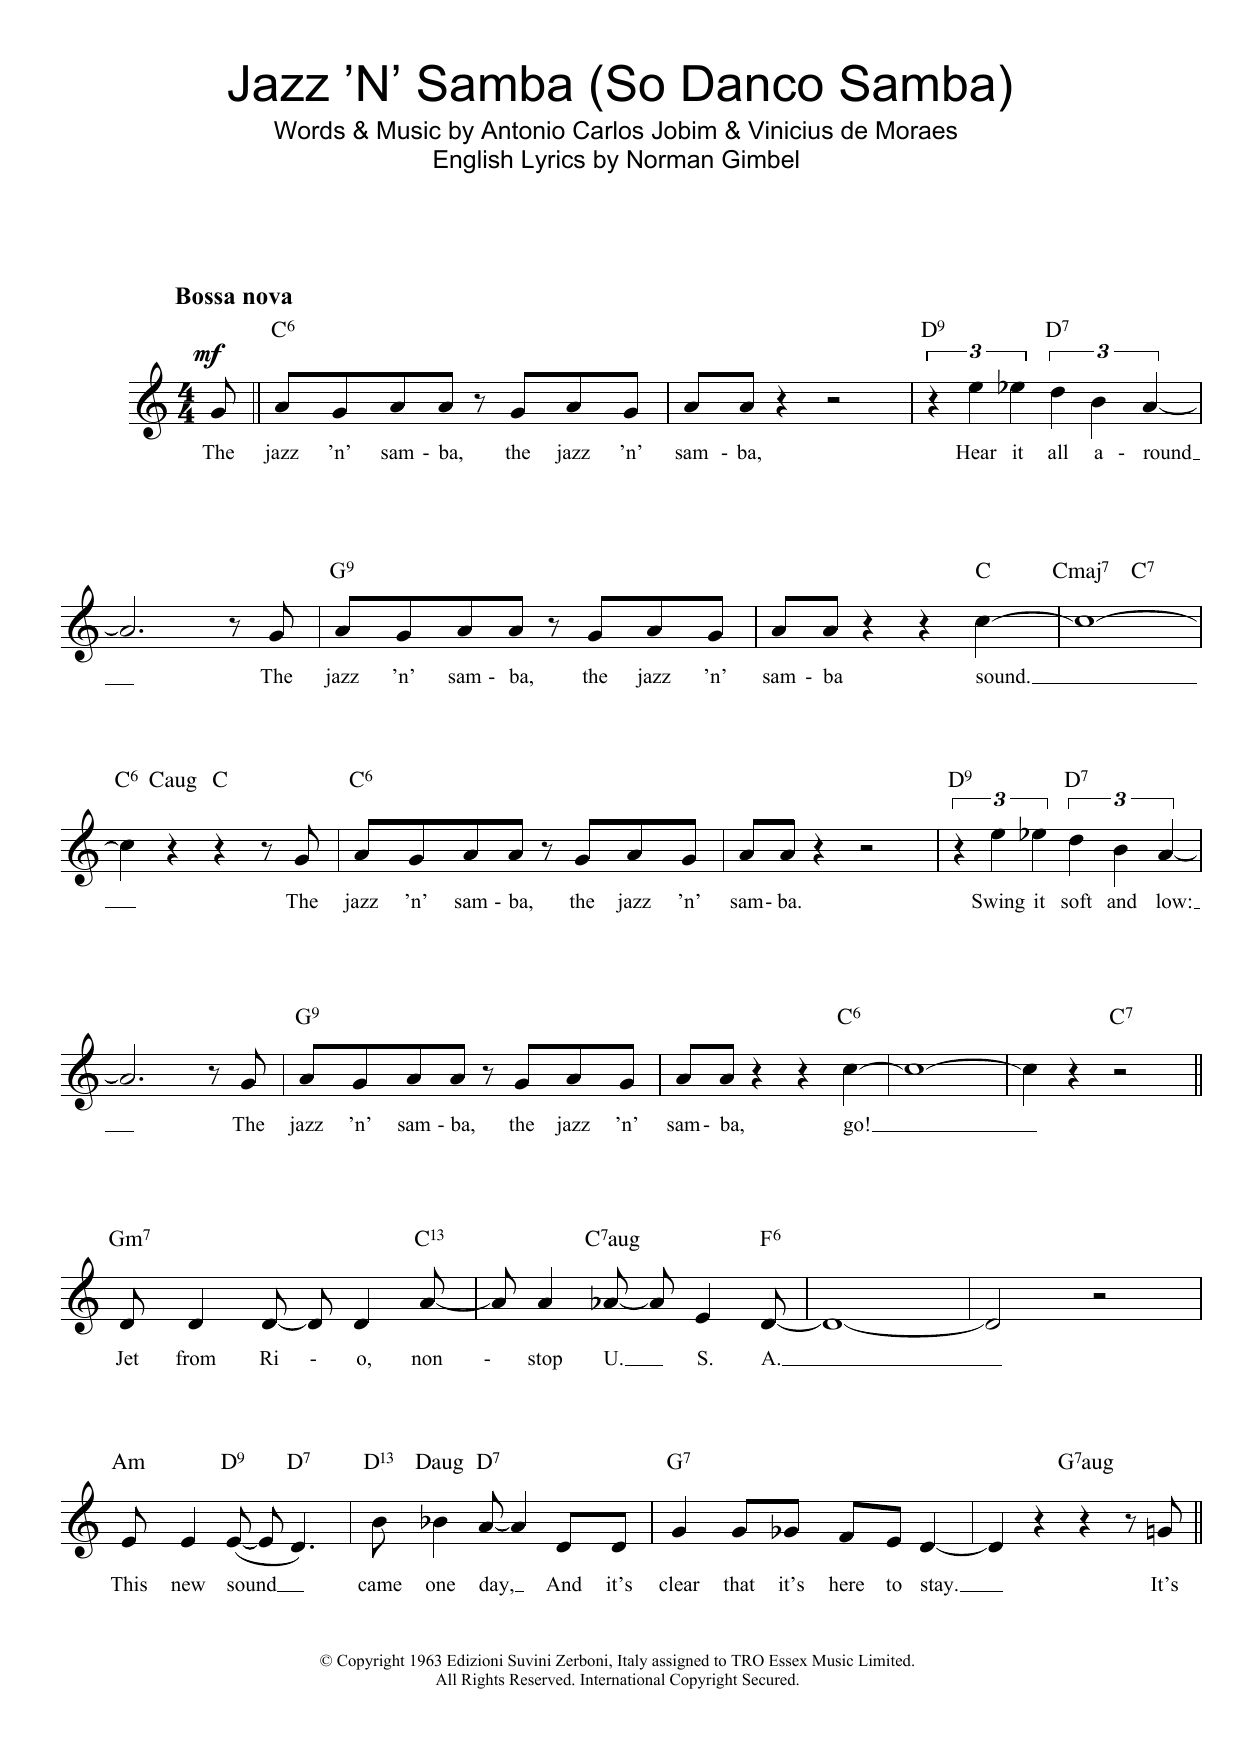 Download Antonio Carlos Jobim Jazz 'N' Samba (Só Danço Samba) Sheet Music and learn how to play Piano, Vocal & Guitar (Right-Hand Melody) PDF digital score in minutes